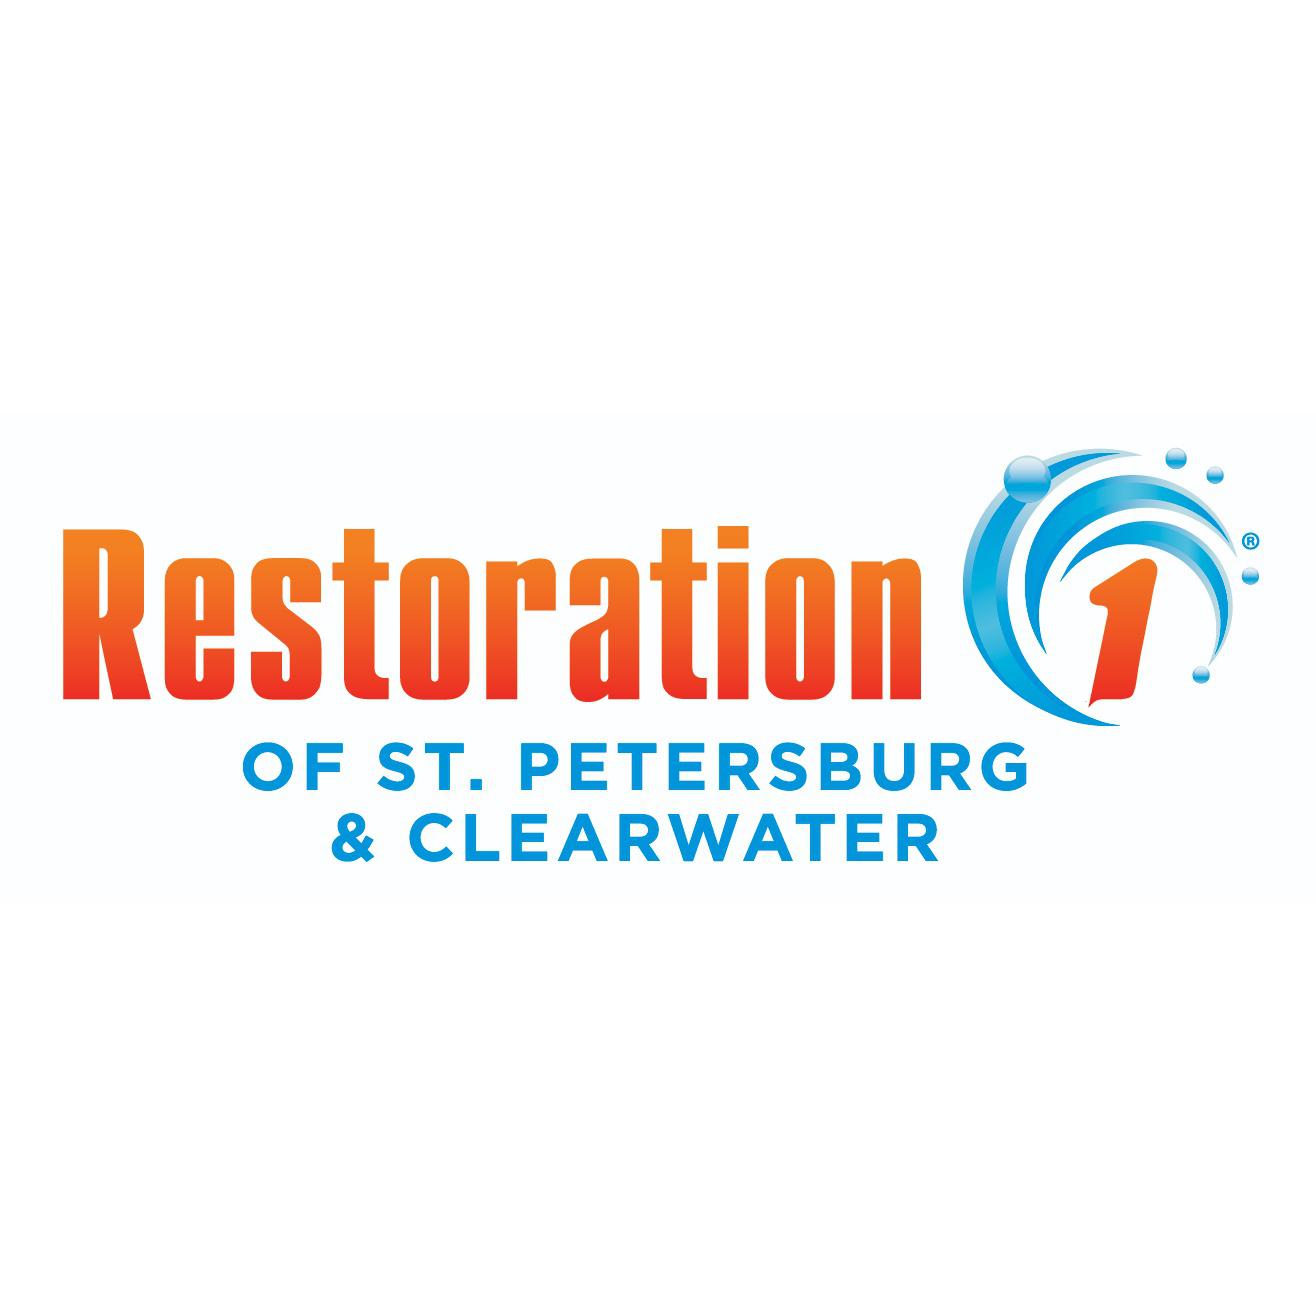 Restoration 1 of St. Petersburg & Clearwater